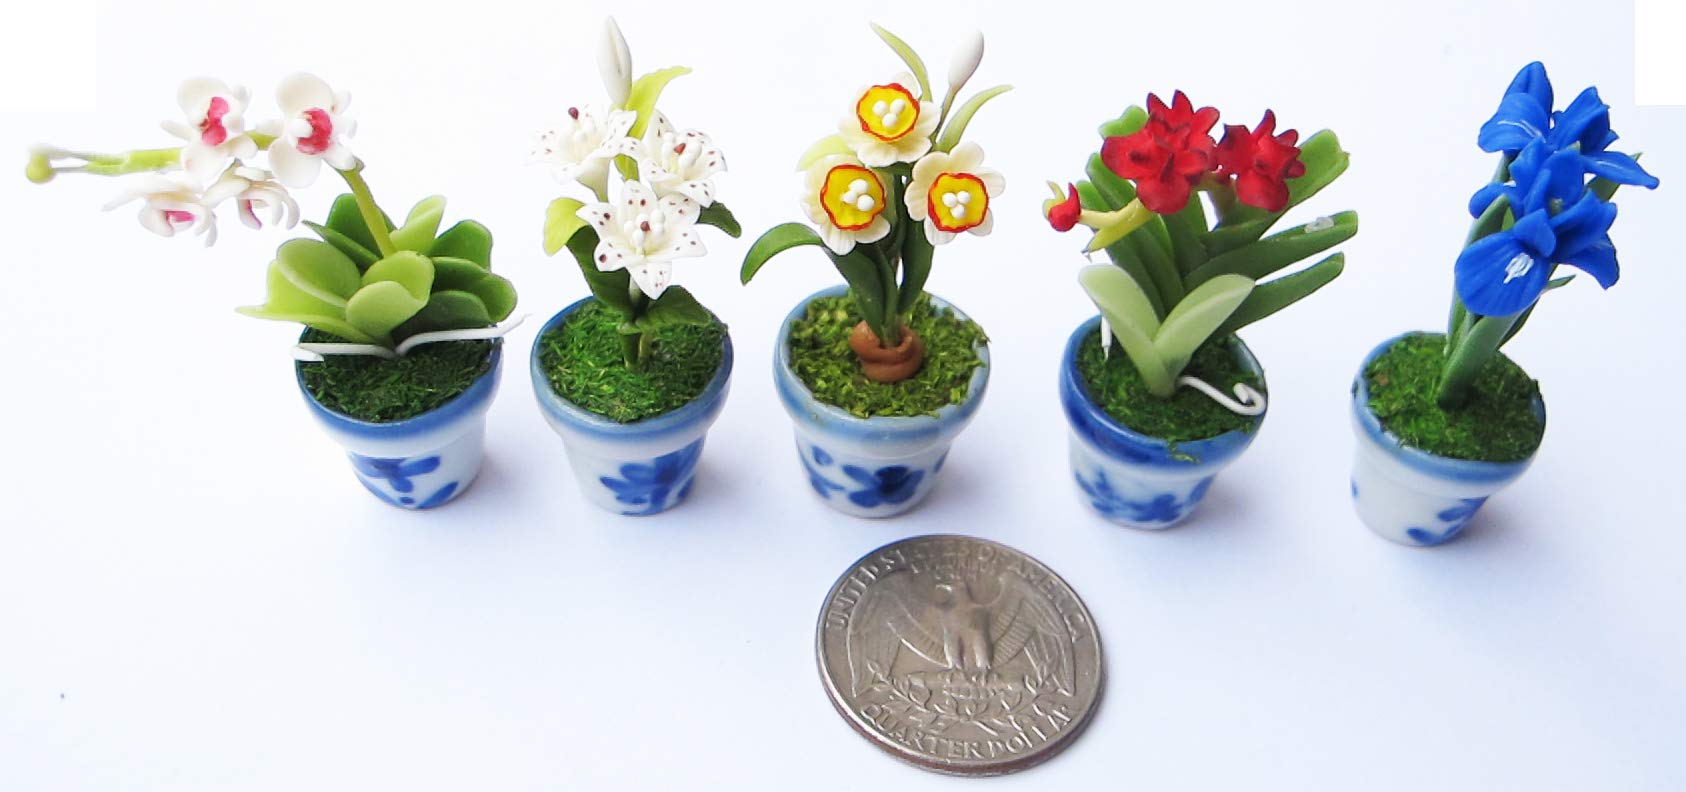 ThaiHonest Mixed 5 Lovely Mix Plant Flower Dollhouse Miniature Flower,Home Decore